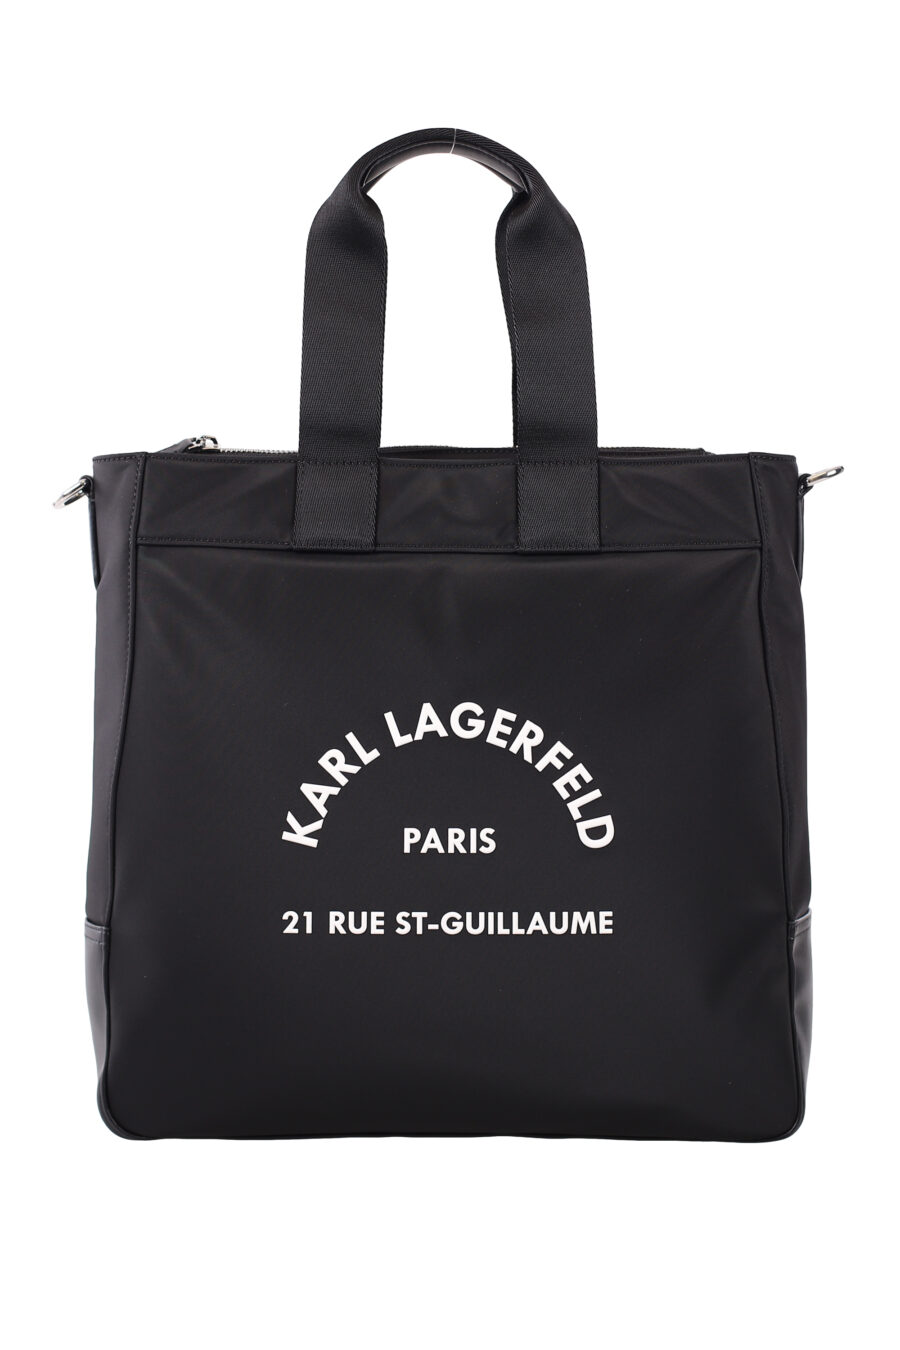 Tote bag negro de nylon con logo "rue st-guillaume" - IMG 1593